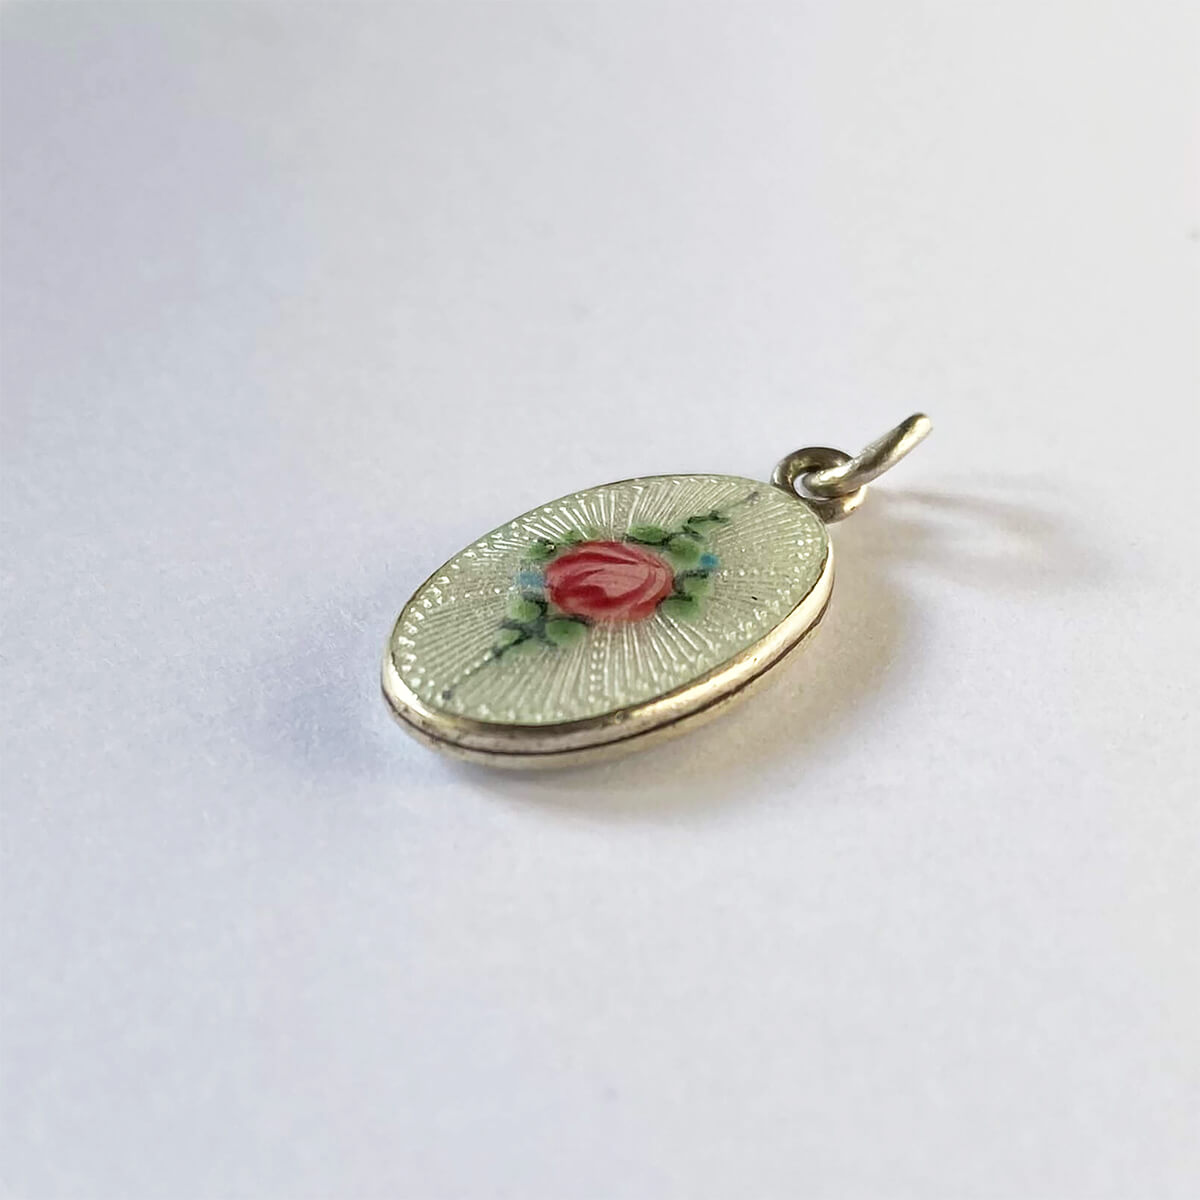 Vintage 1950s flower charm white guilloche enamel pink rose sterling silver pendant